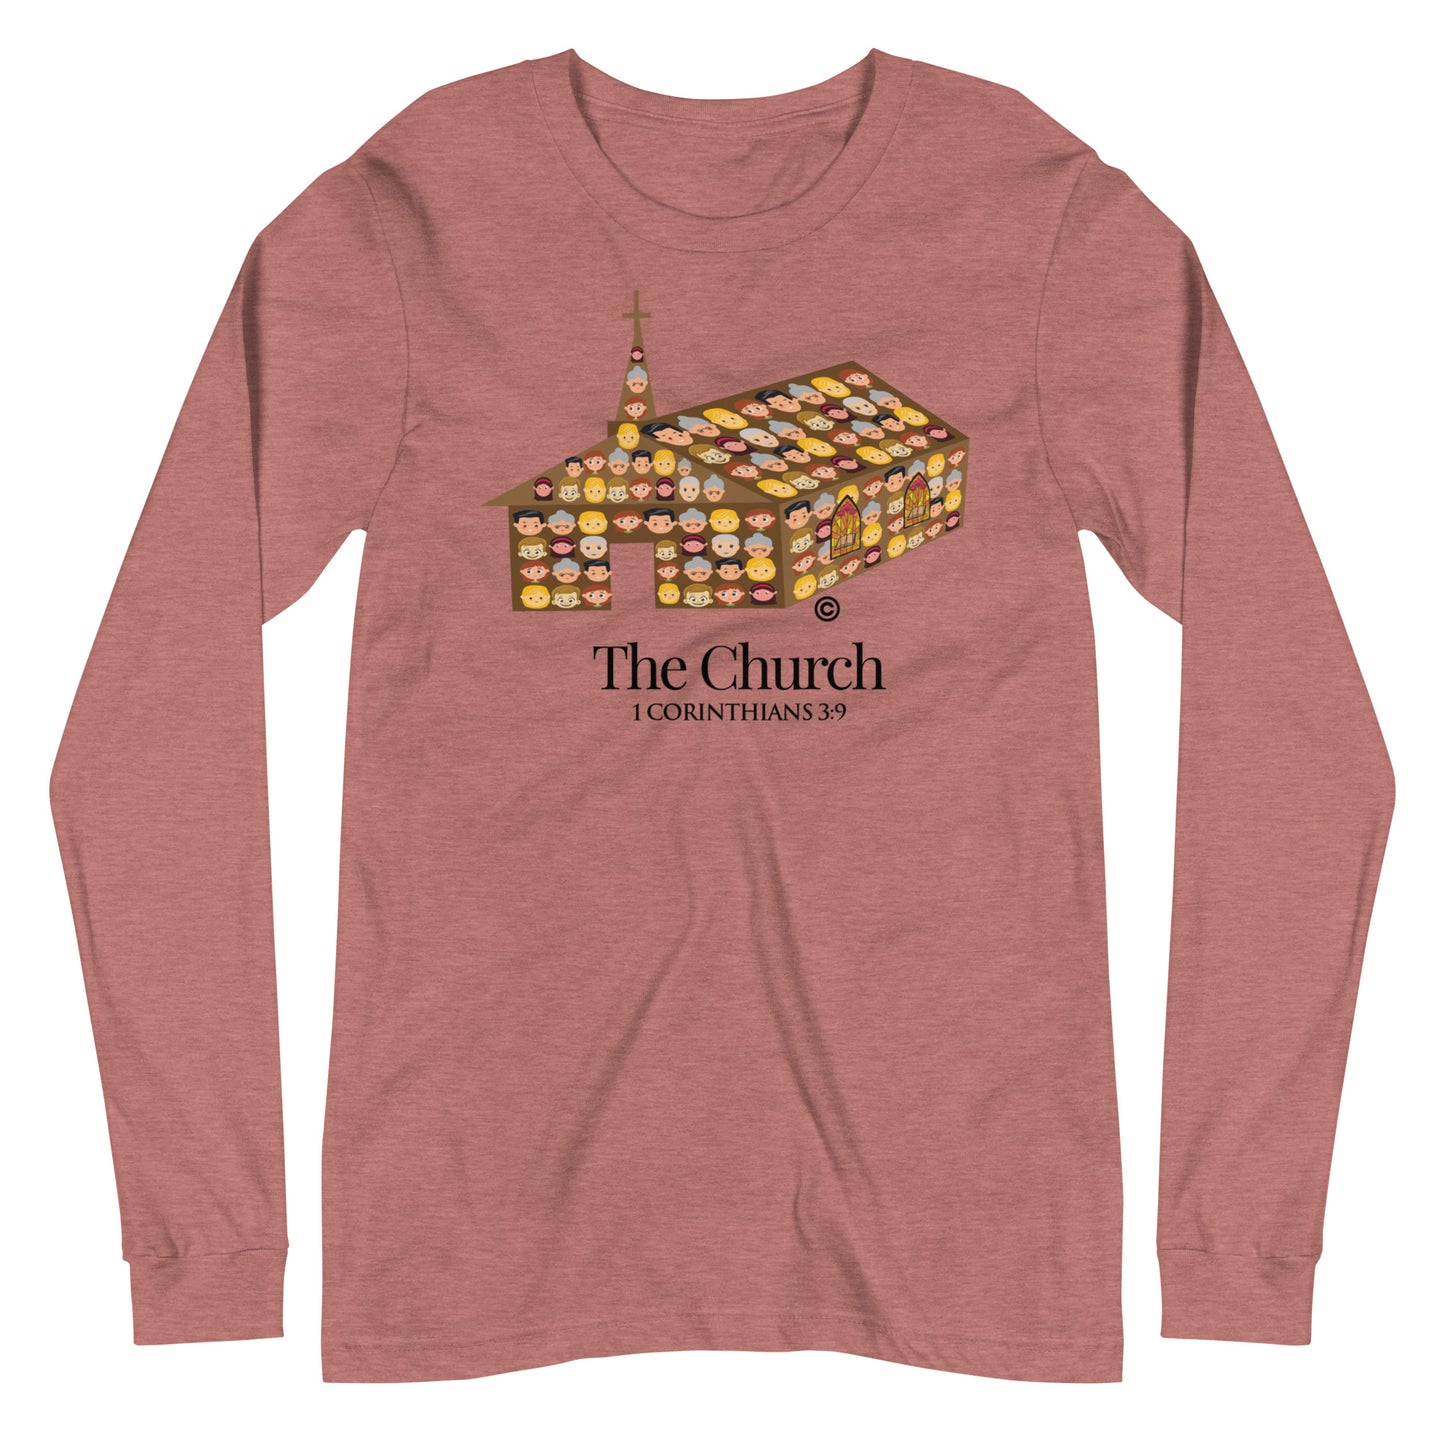 The Church Women's Long Sleeve Tee